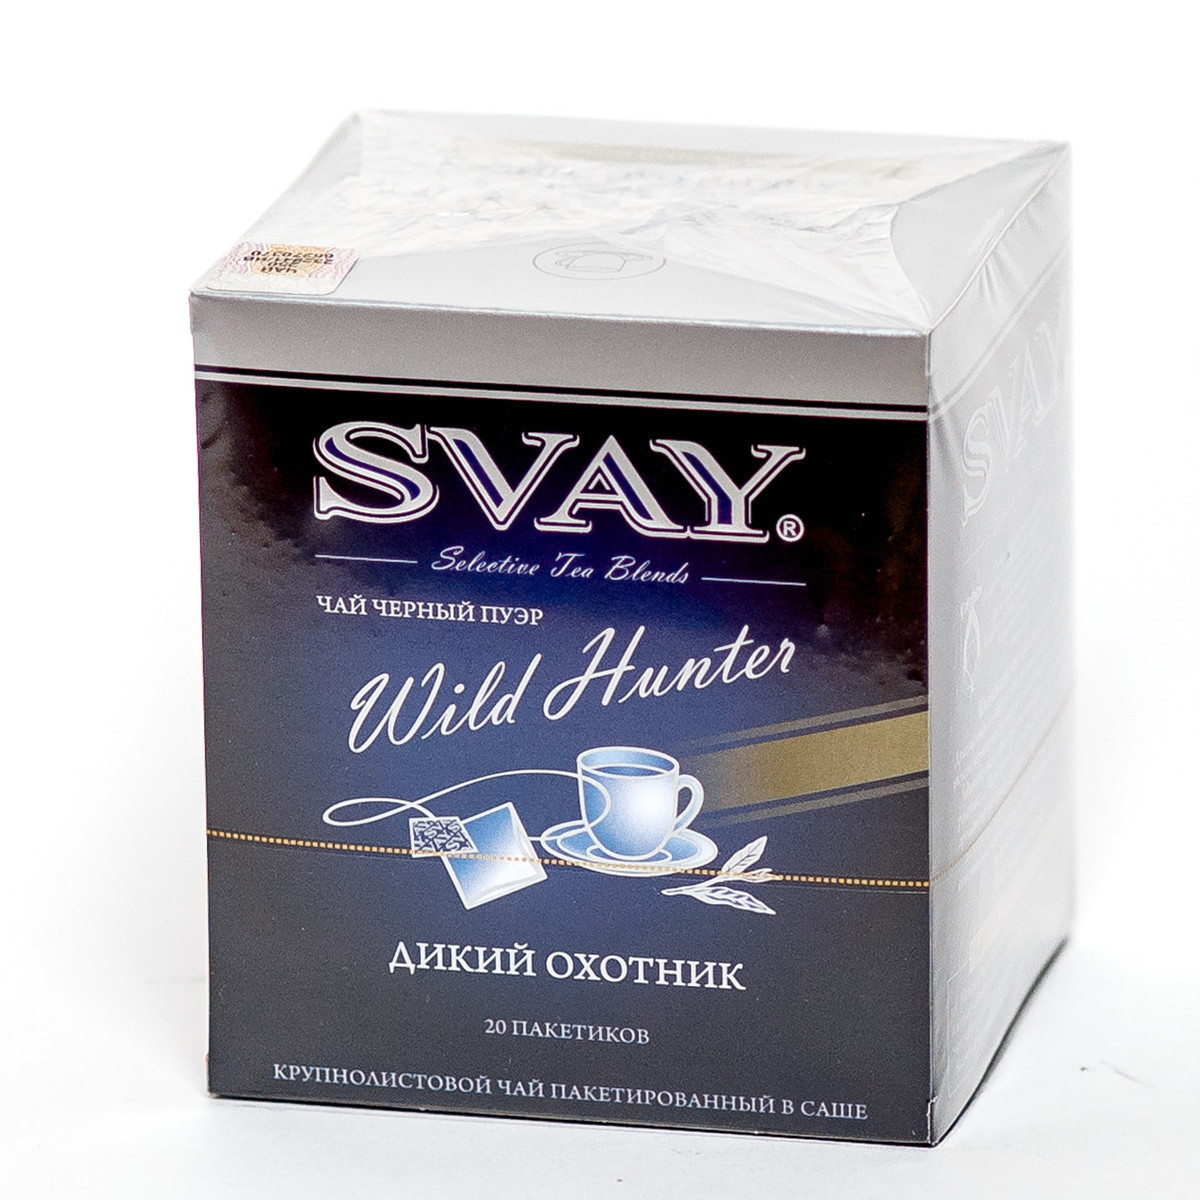 Чай "Svay Wild Hunter", ТМ "SVAY" чай черный Пуэр (пакетированный саше 20х2 гр)